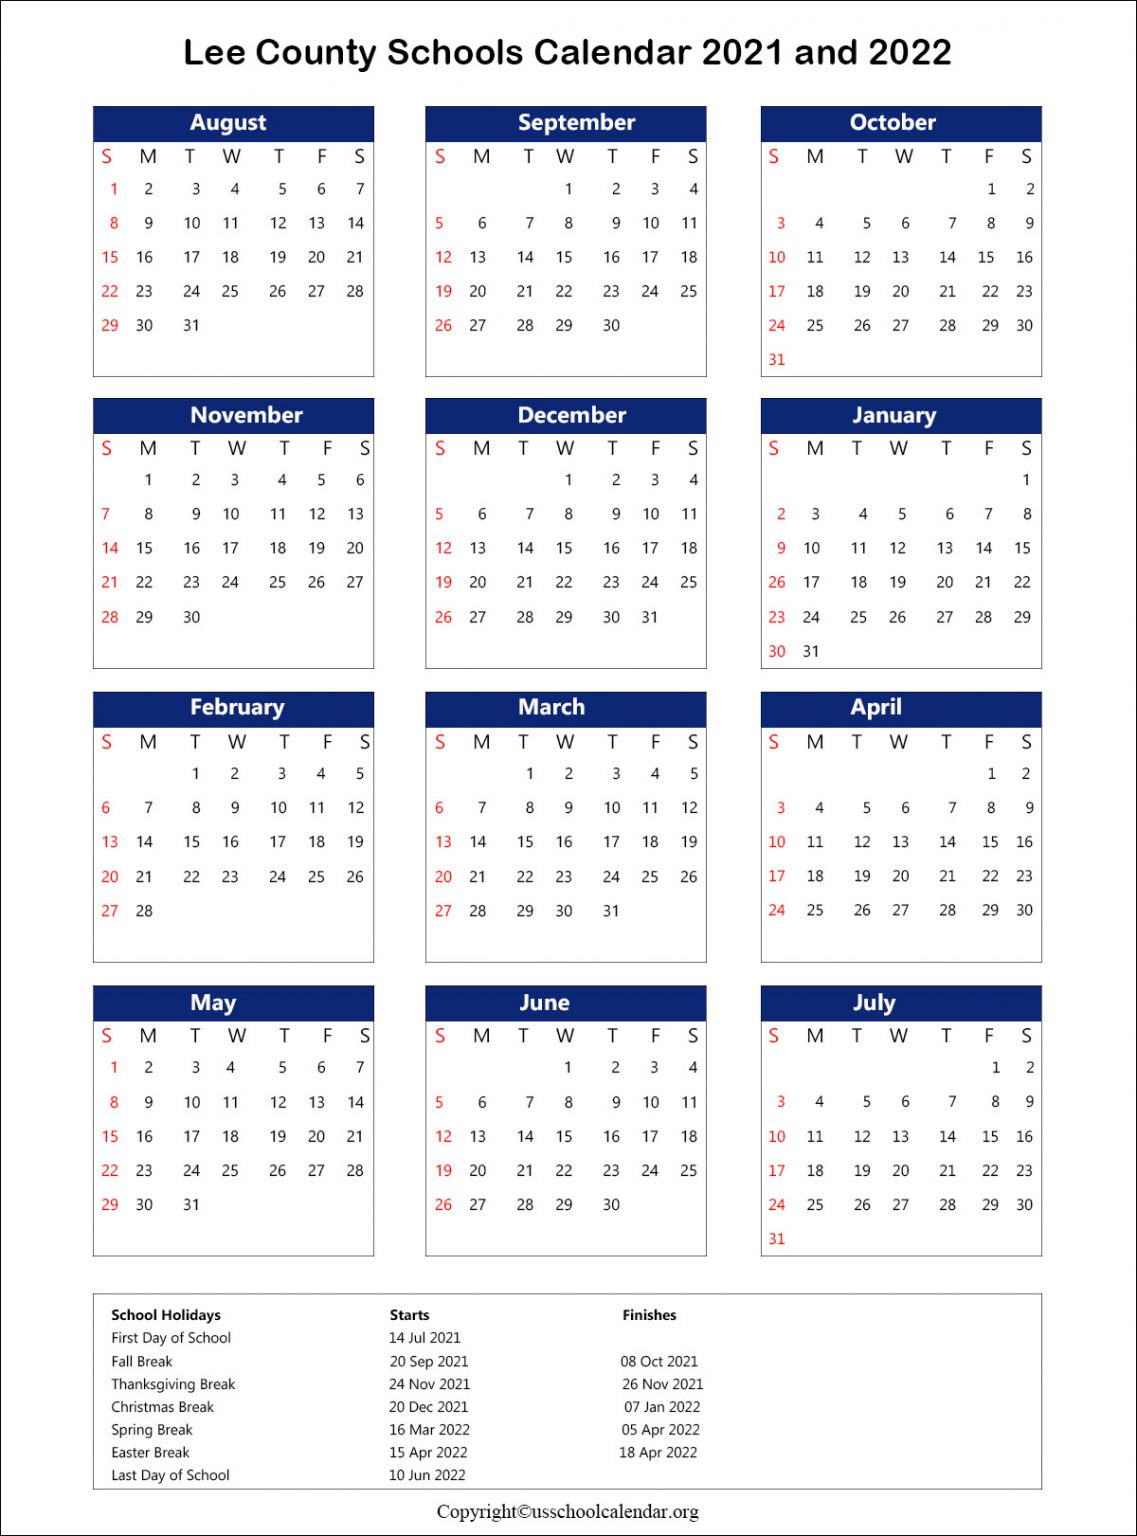 lee-county-school-calendar-with-holidays-2021-2022